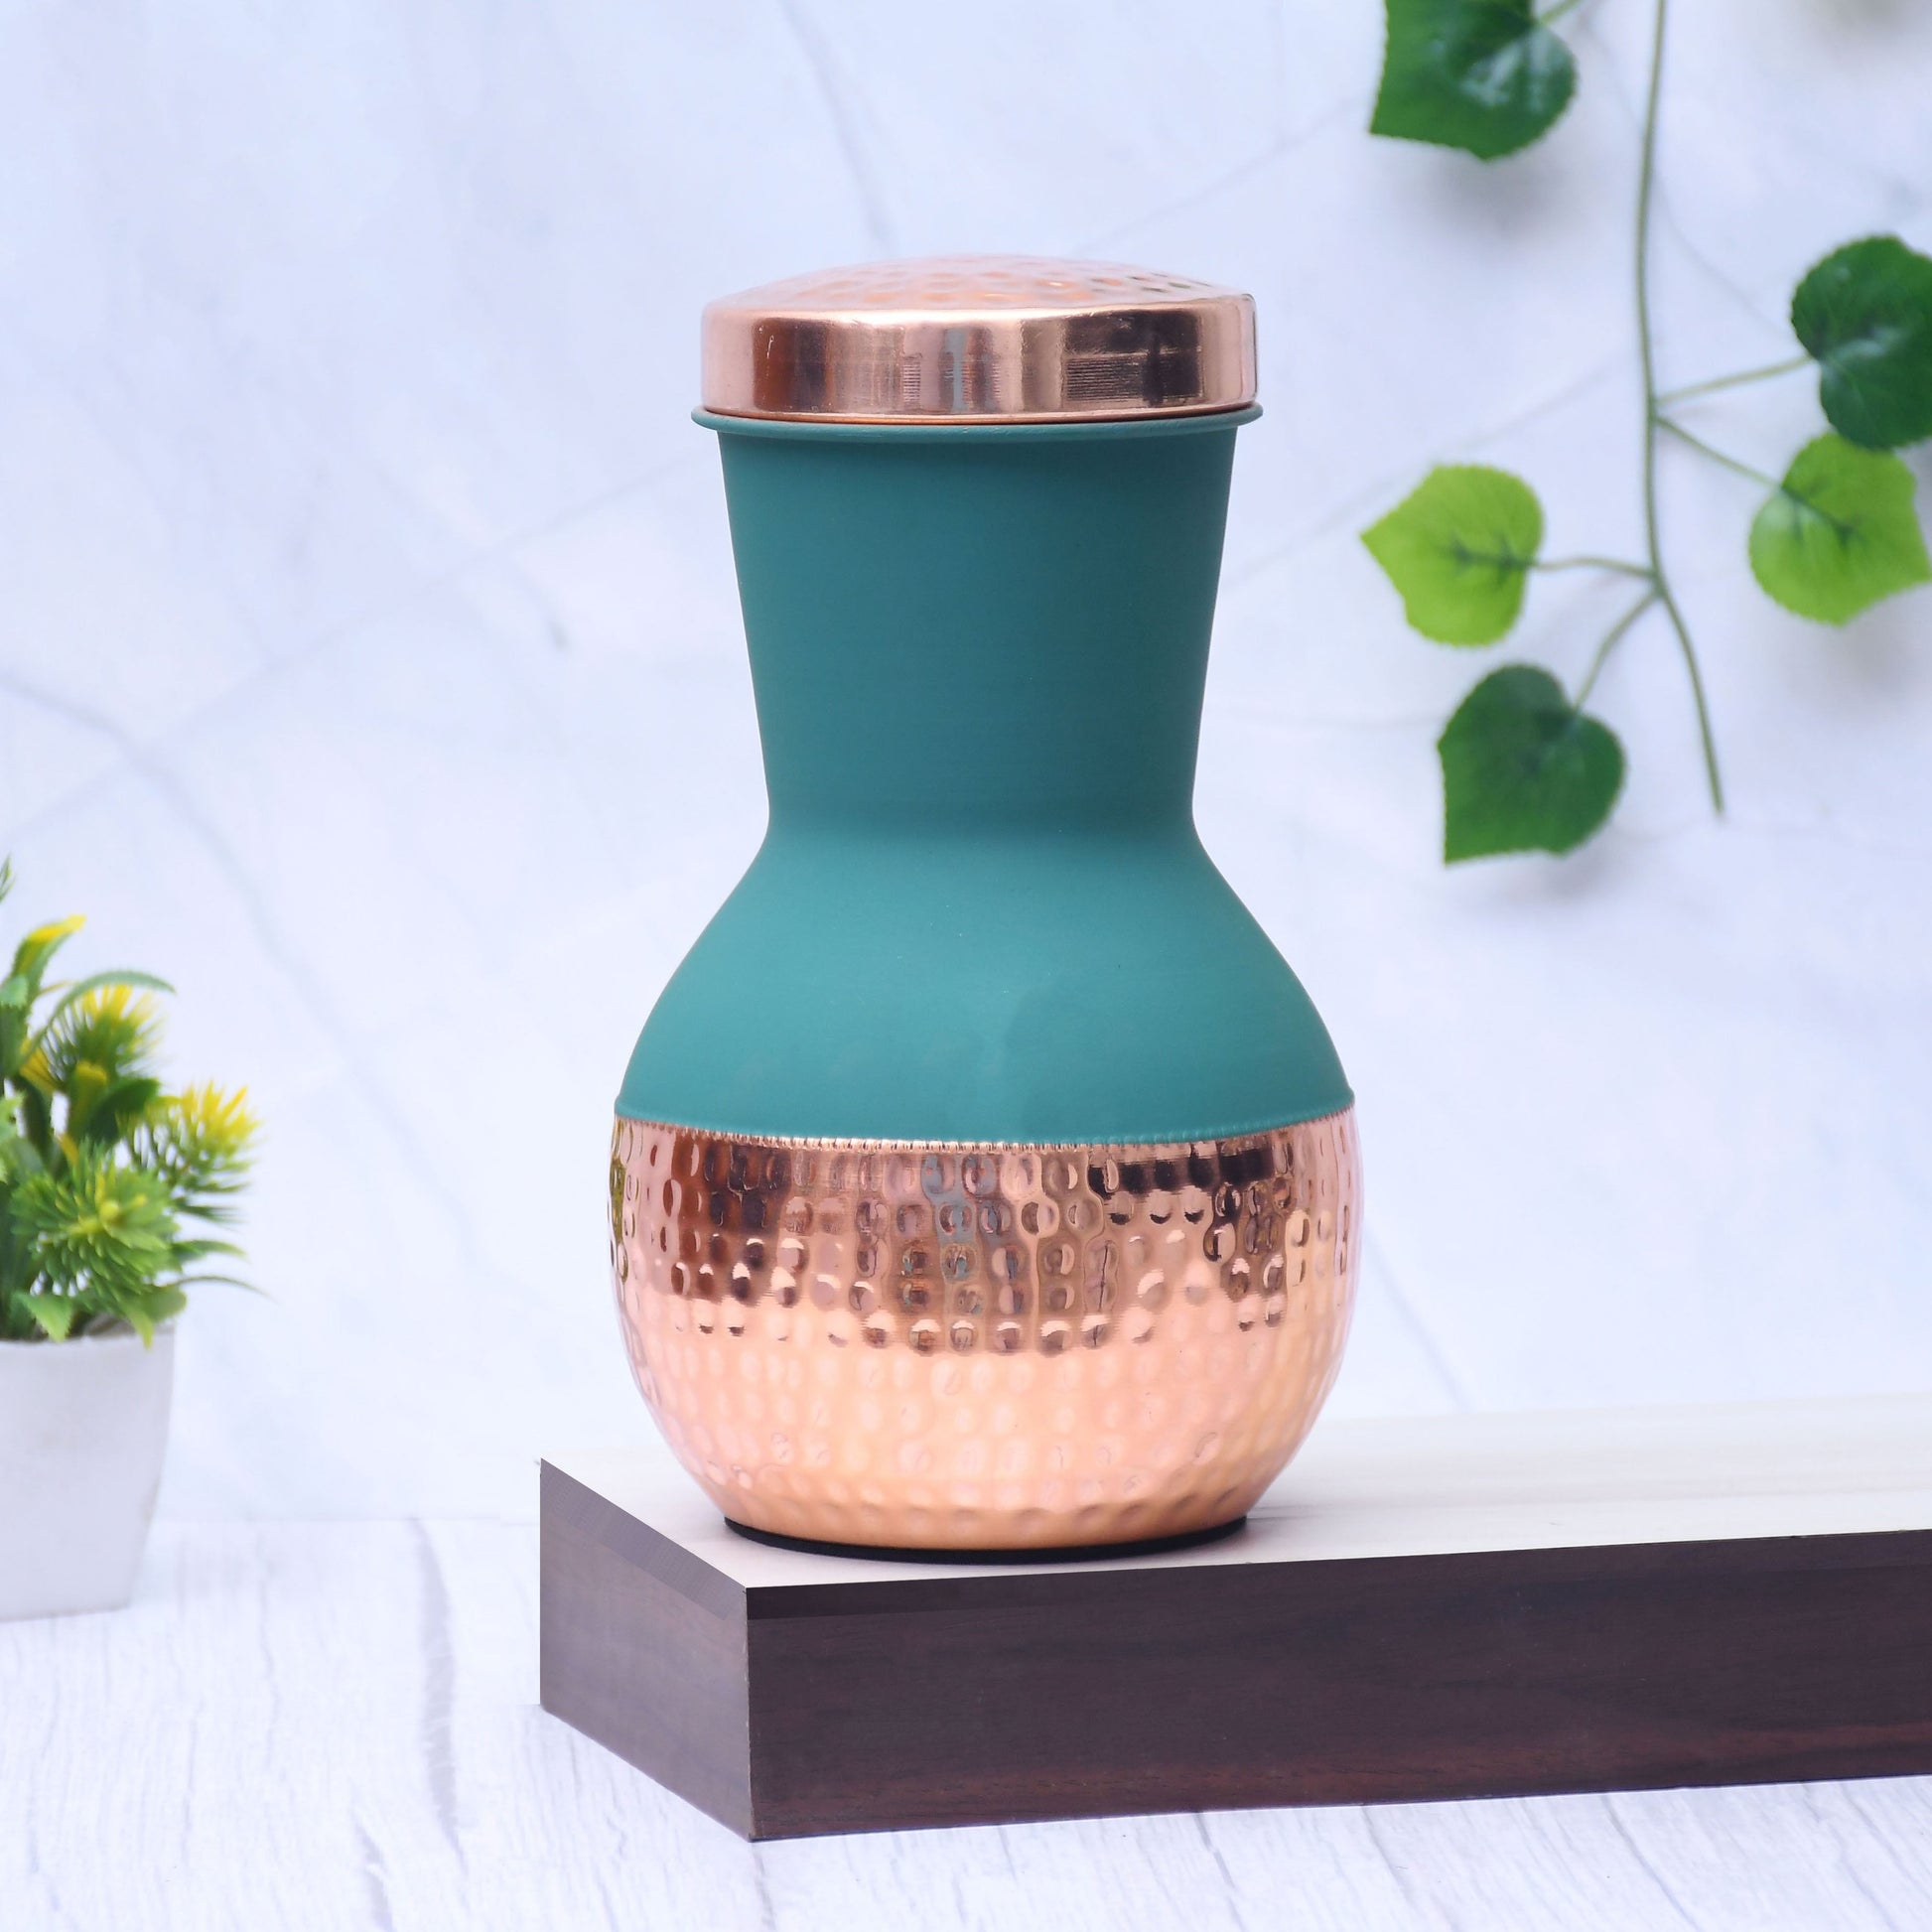 SAMA Homes - pure copper silk green matka pot with inbuilt glass capacity 1200ml